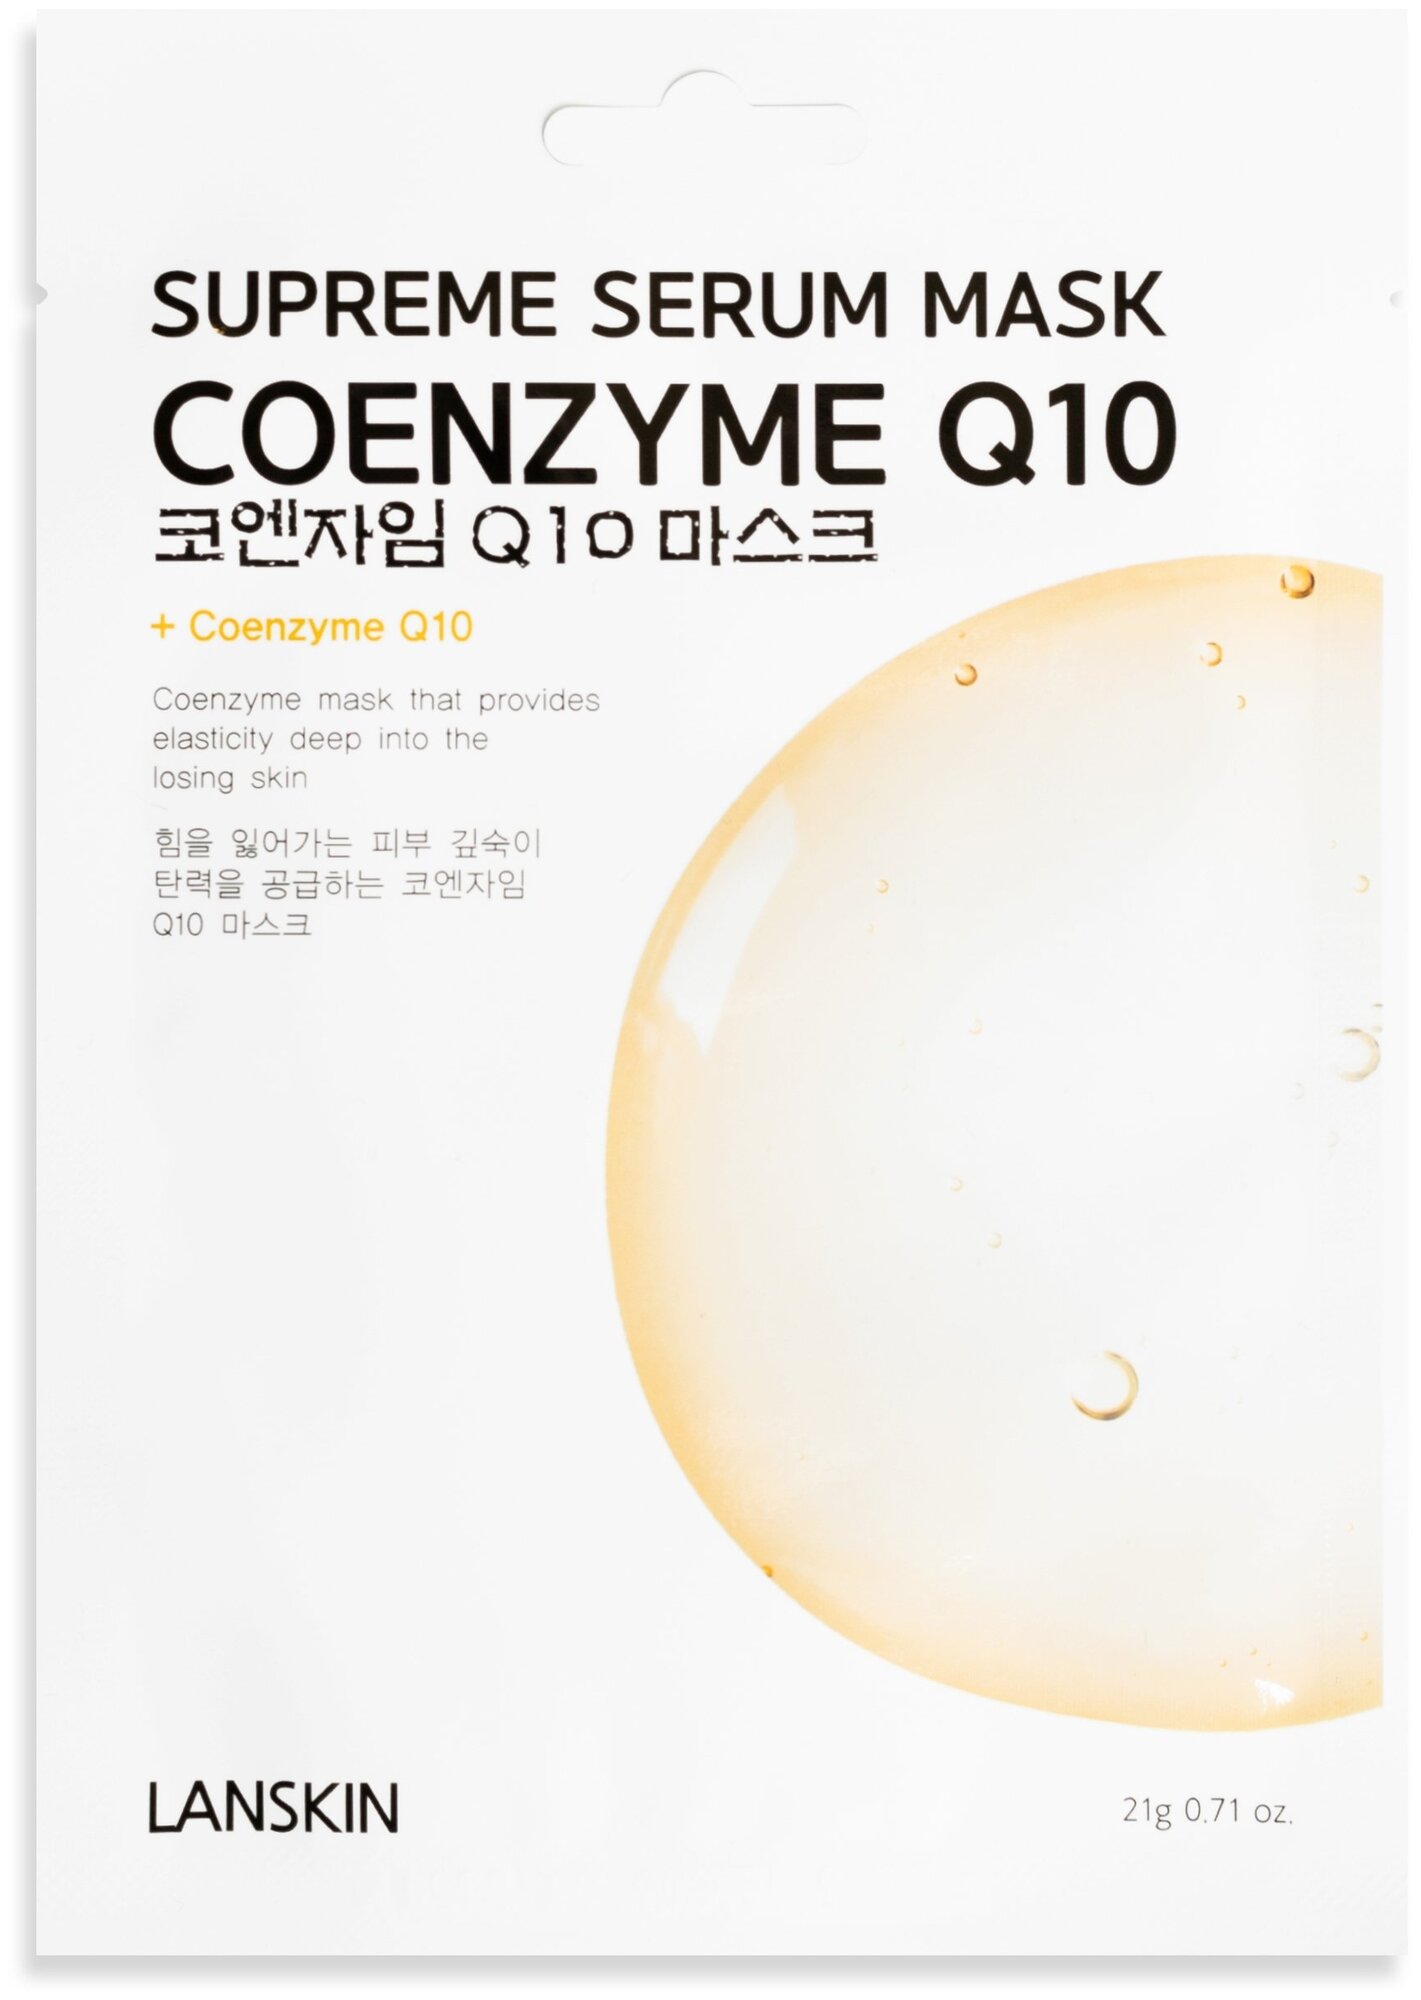 Lanskin COENZYME Q10 SUPREME SERUM MASK тканевая маска для лица с коэнзимом Q10, 21 г